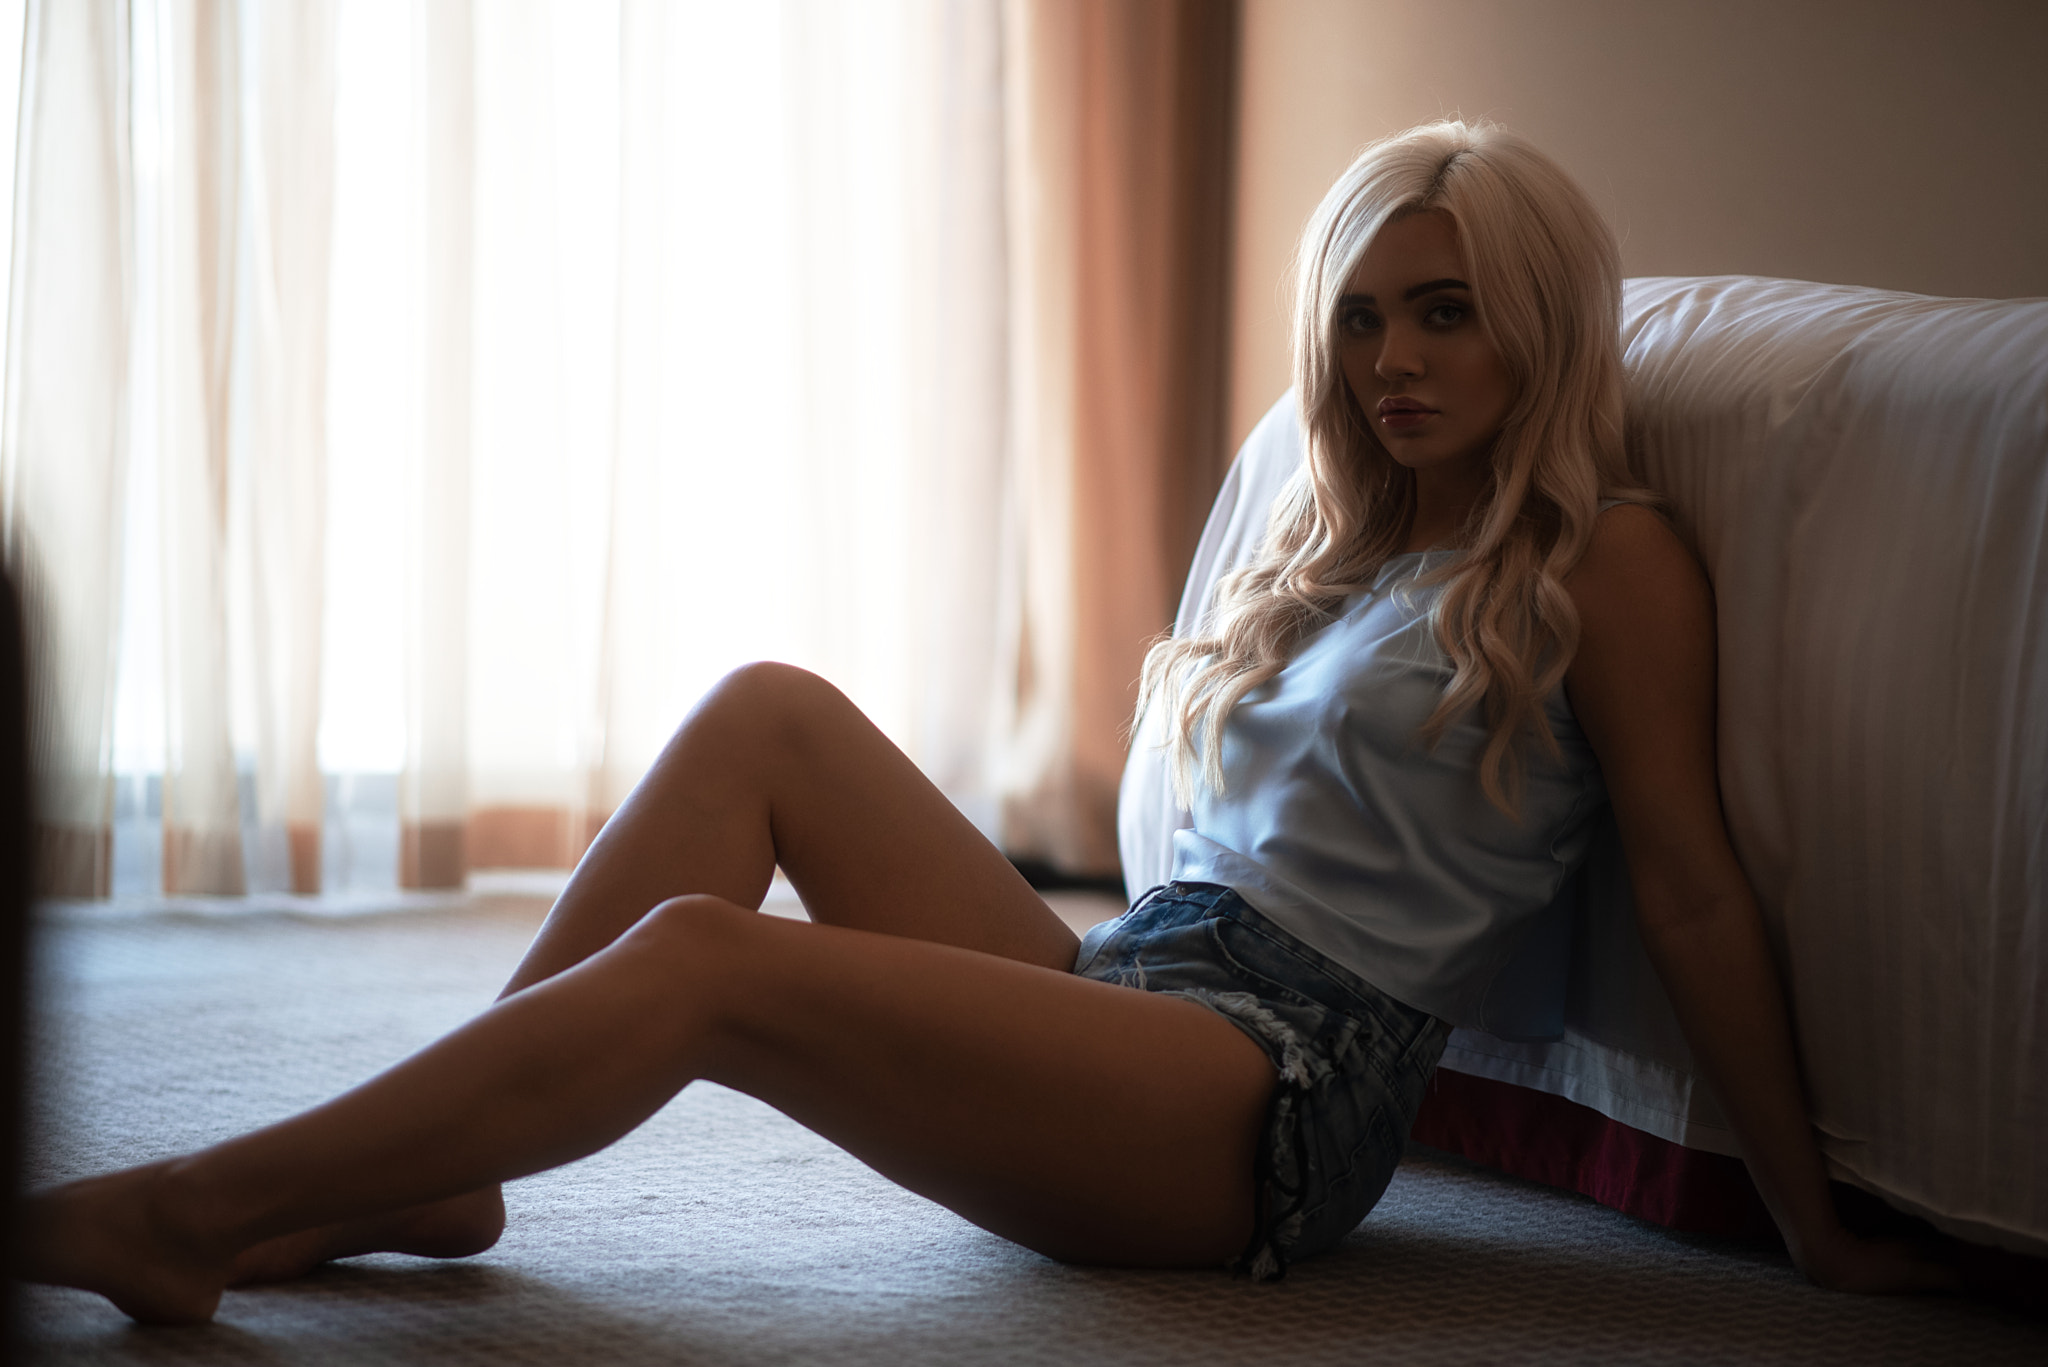 People 2048x1367 women blonde sitting jean shorts bed brunette on the floor low light